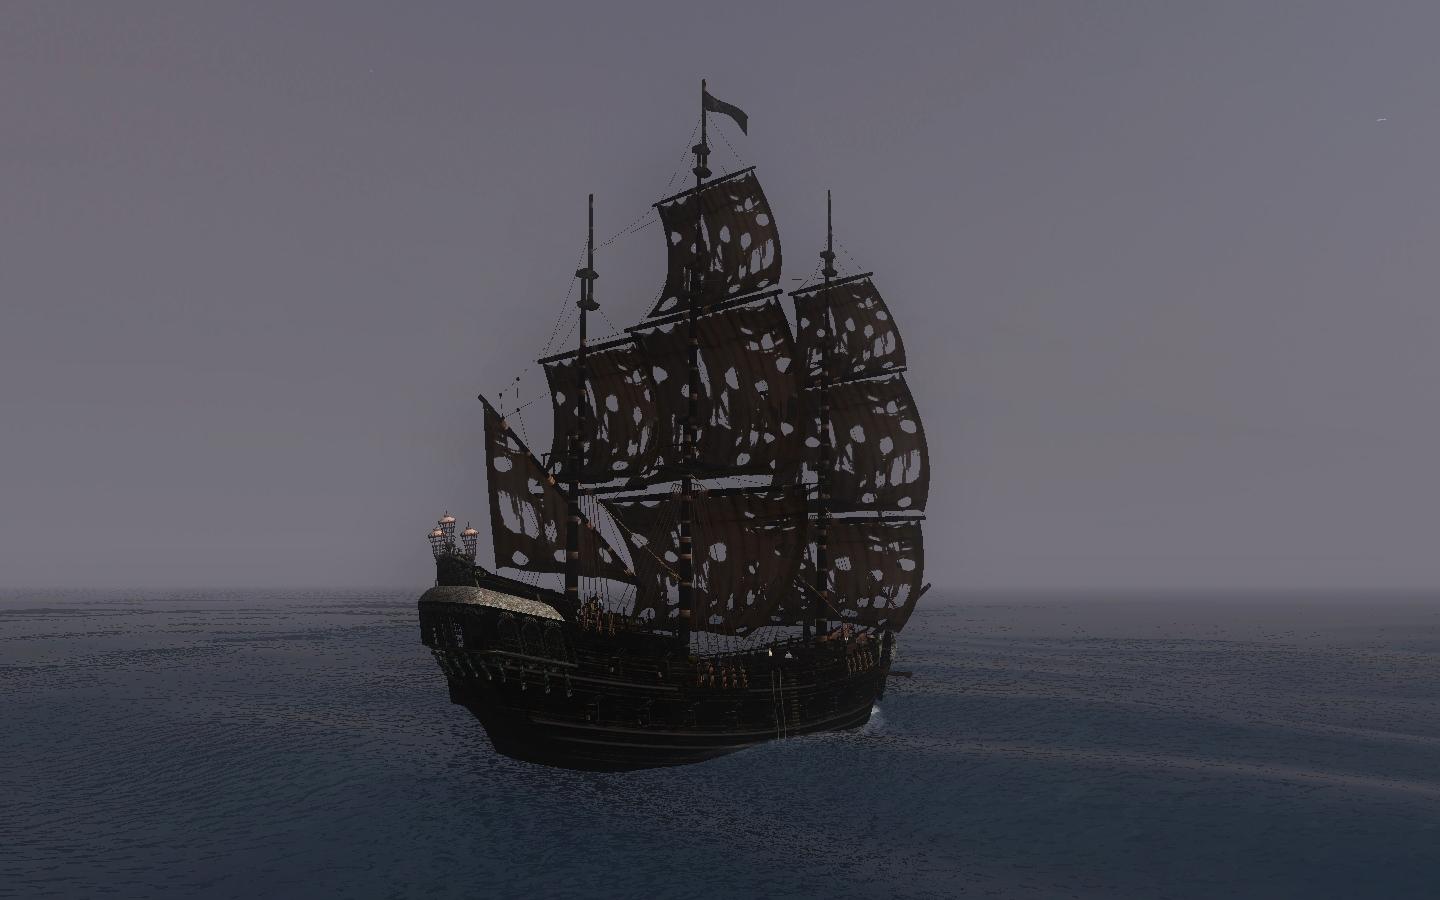 New sails. PiratesAhoy!